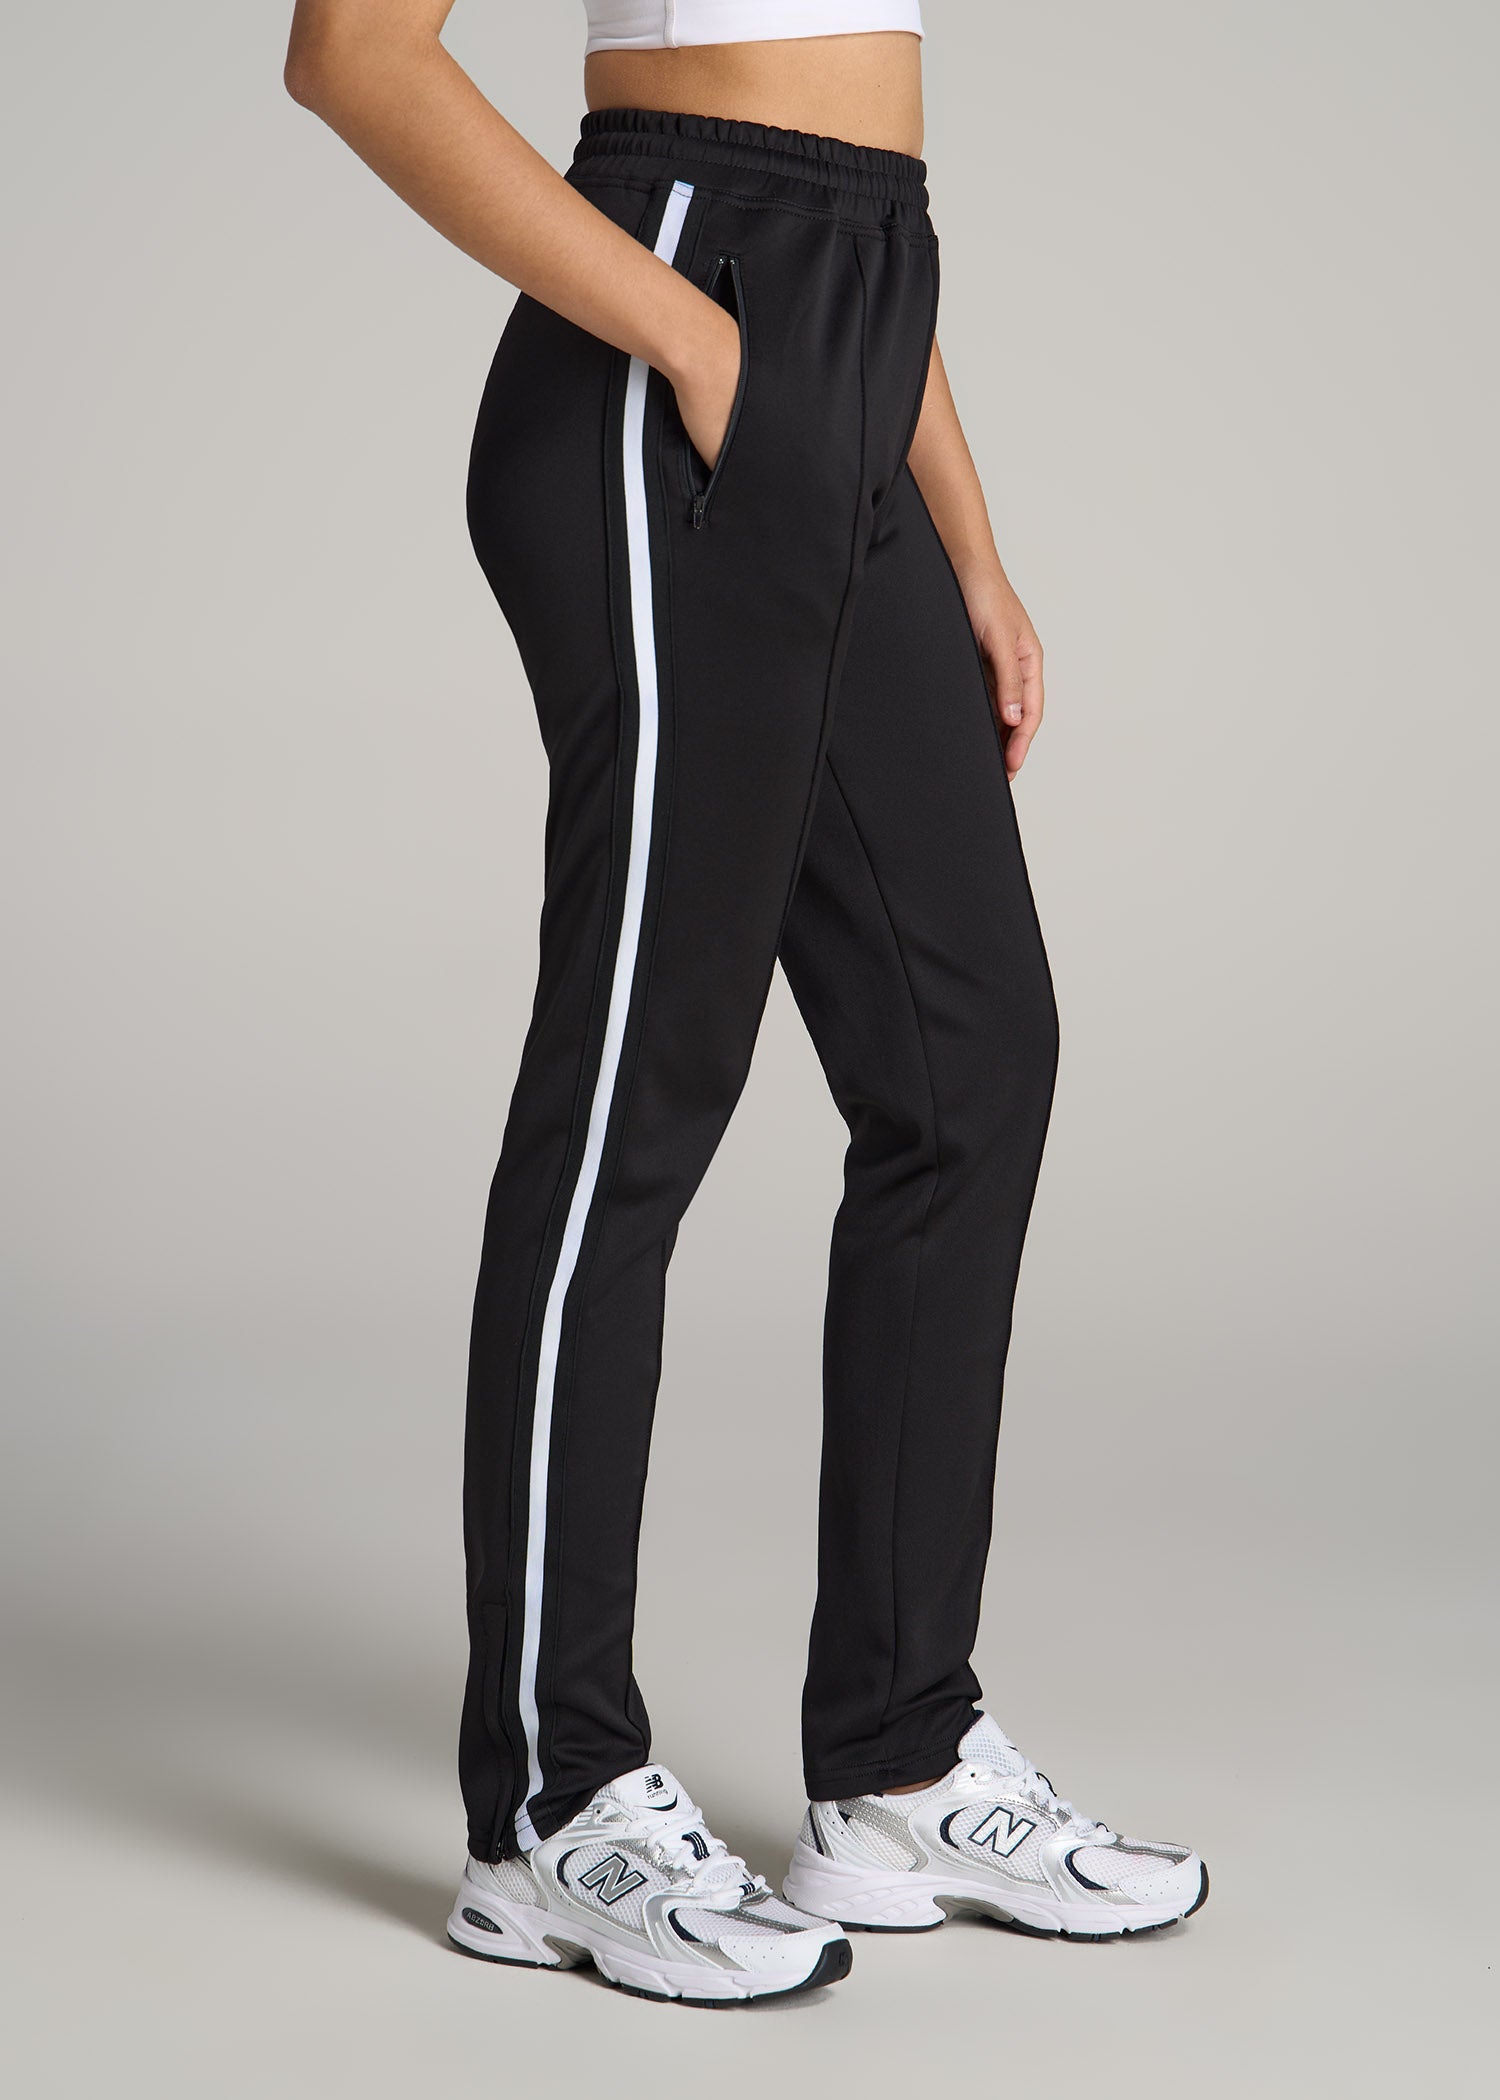 Women's Tall Track Pants: Tall Athletic Black White Stripe Pant